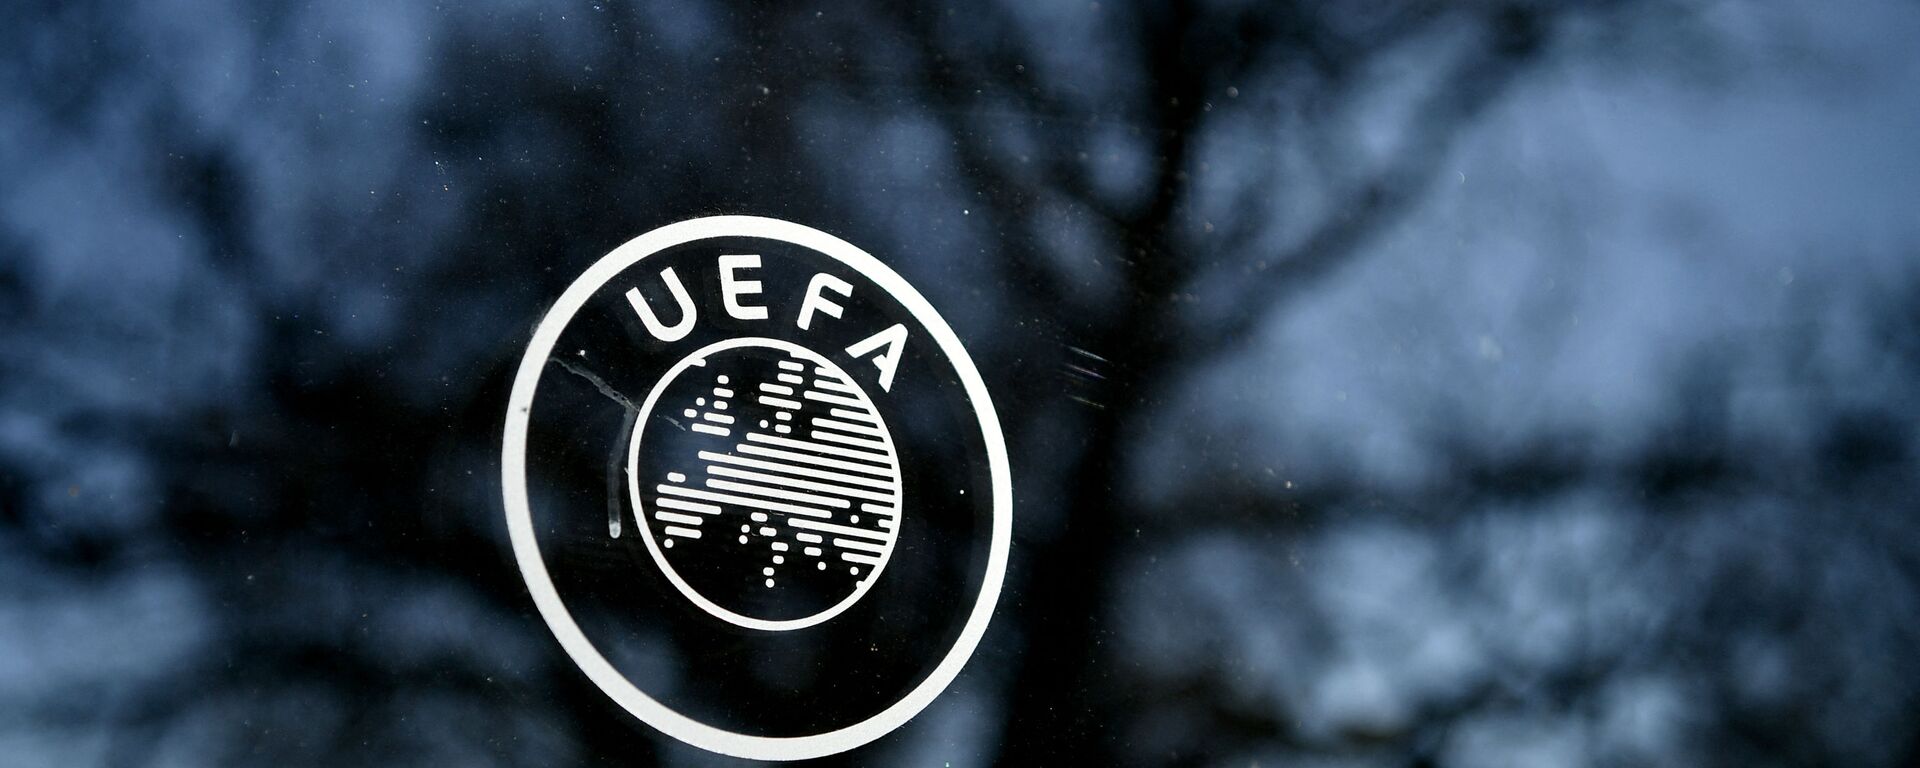 Логотип УЕФА, архивное фото - Sputnik Беларусь, 1920, 24.03.2021